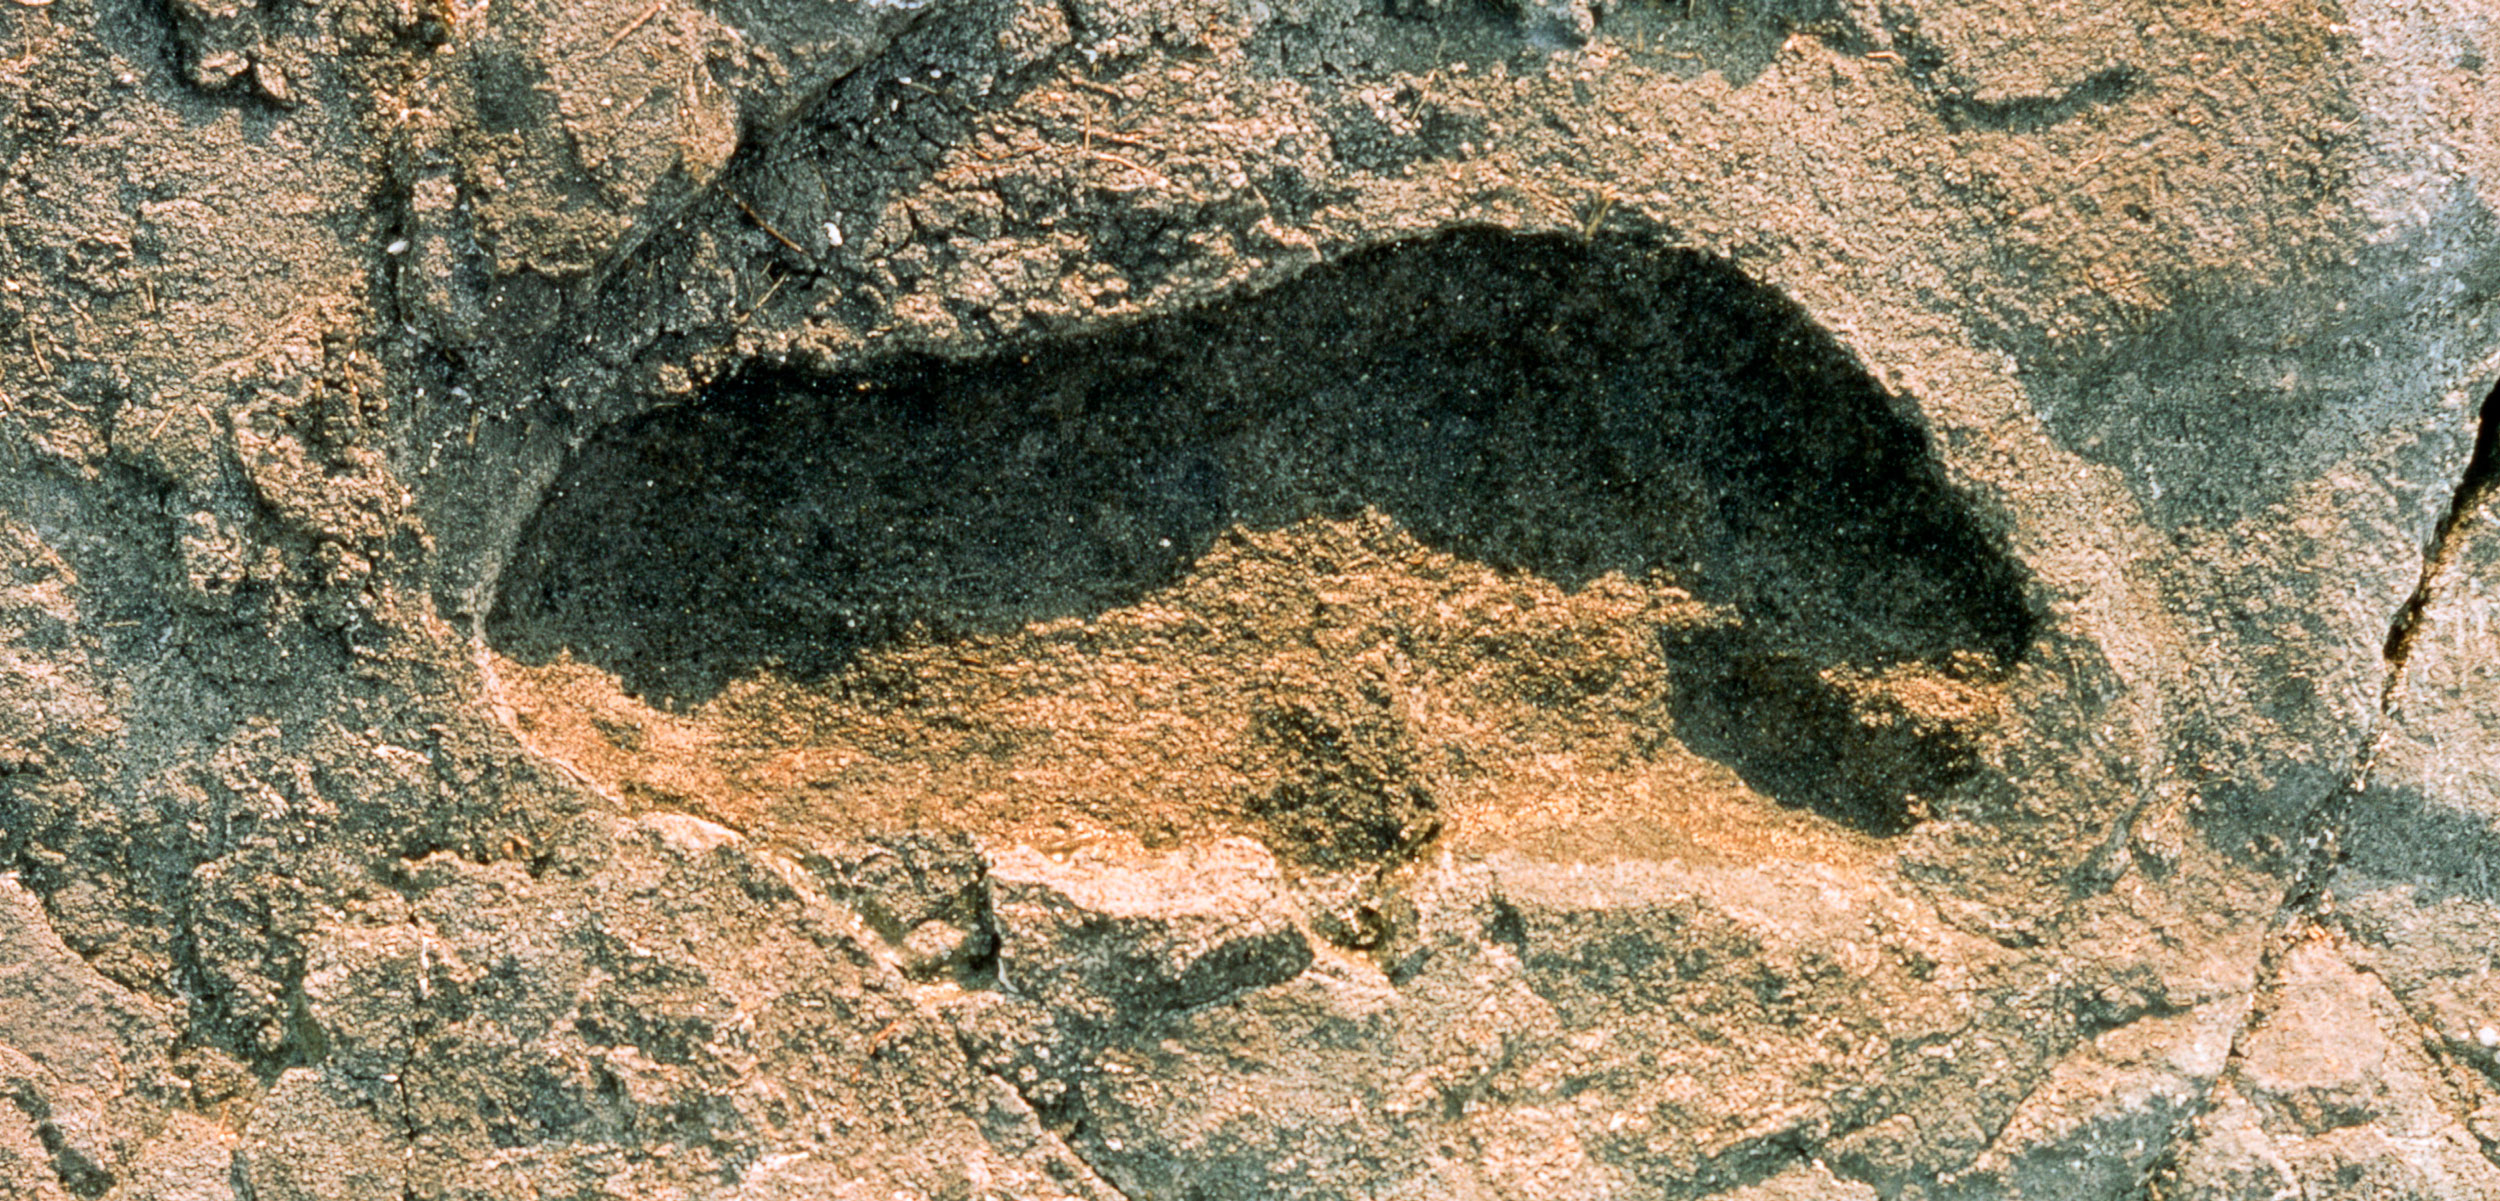 Single hominid footprint from Laetoli, Tanzania